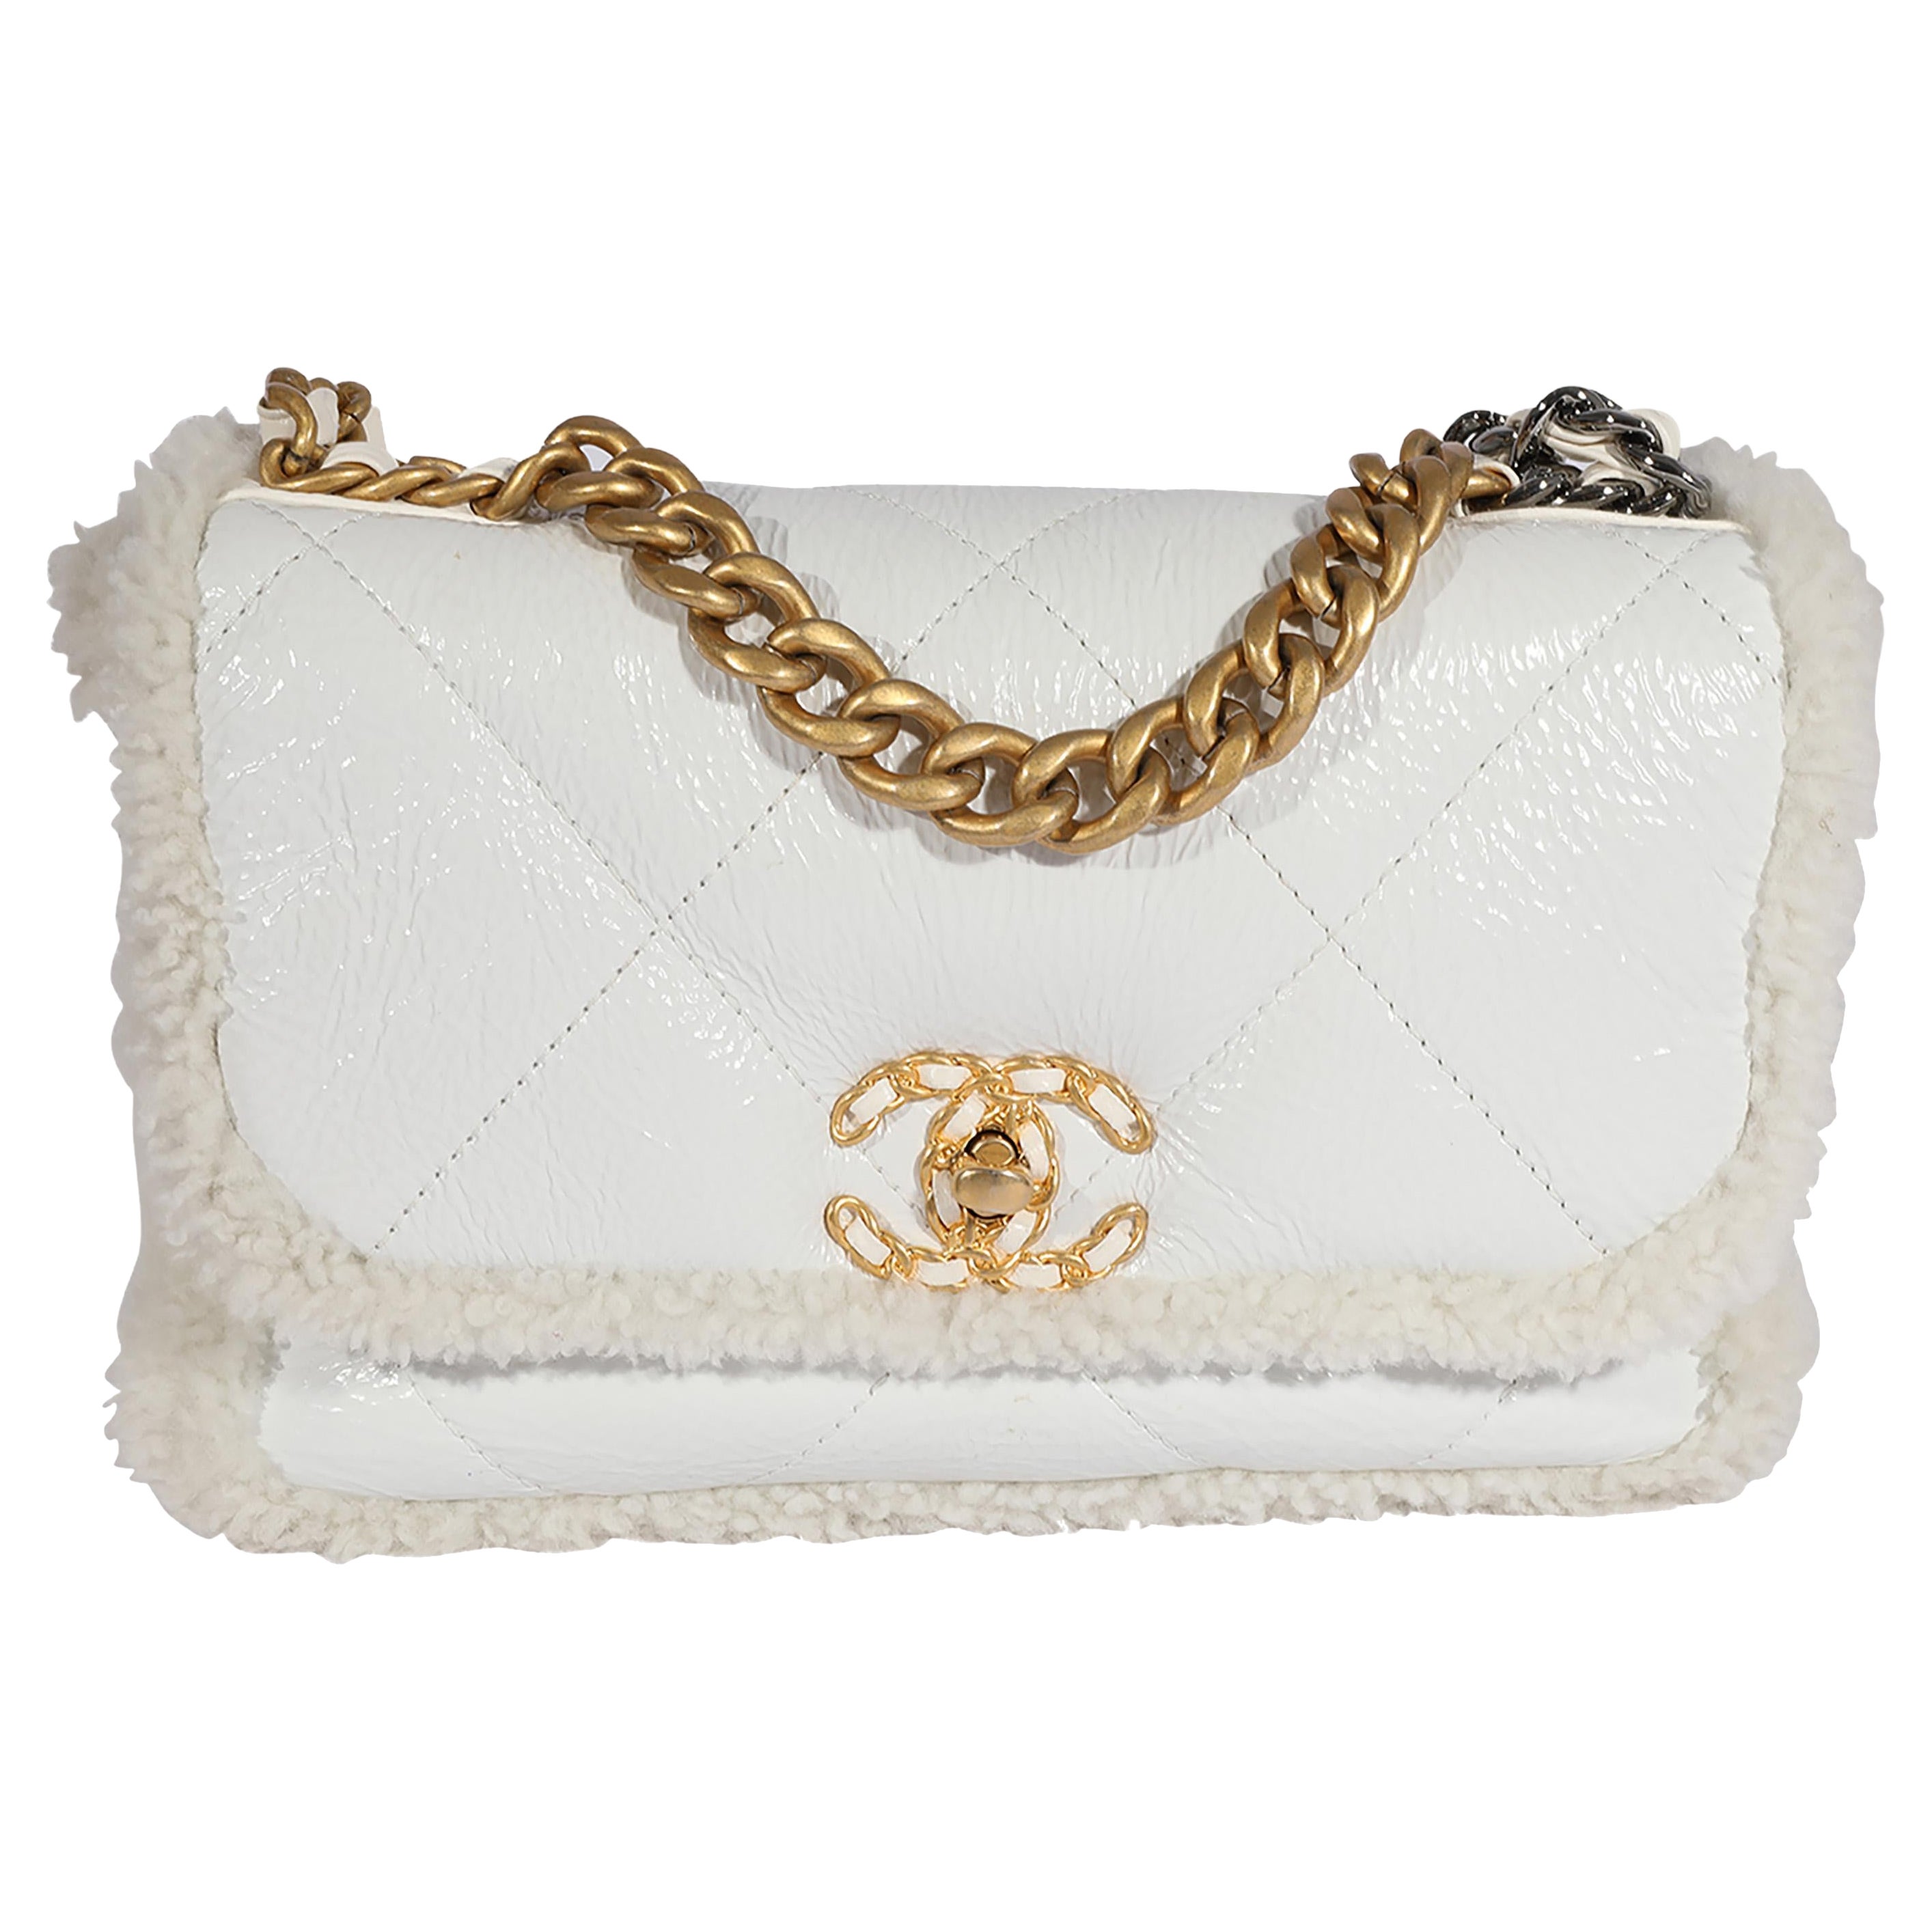 The story of my white Chanel 19 bag – Buy the goddamn bag